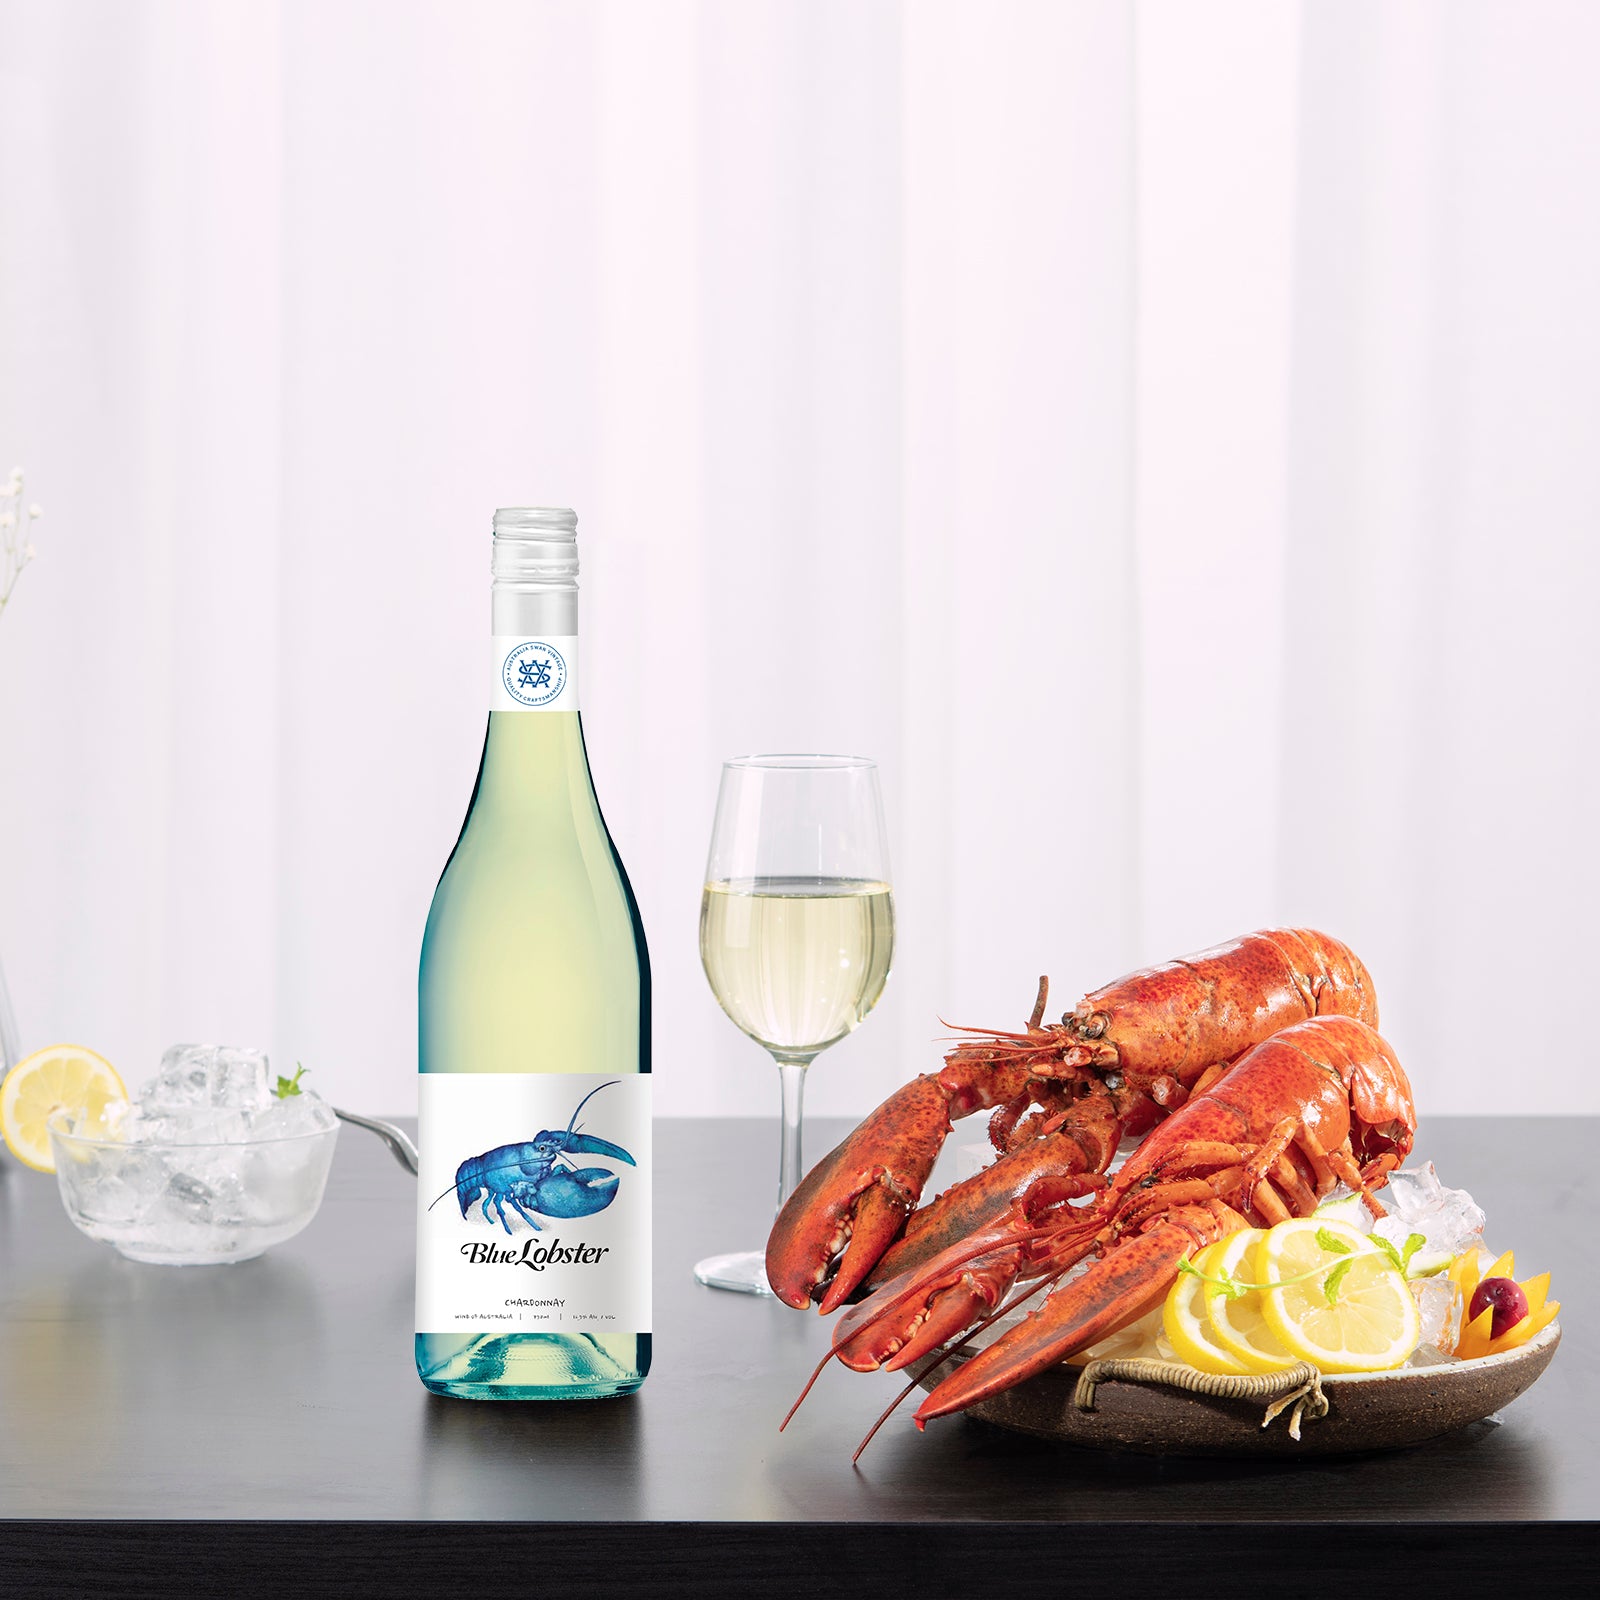 Blue Lobster Chardonnay